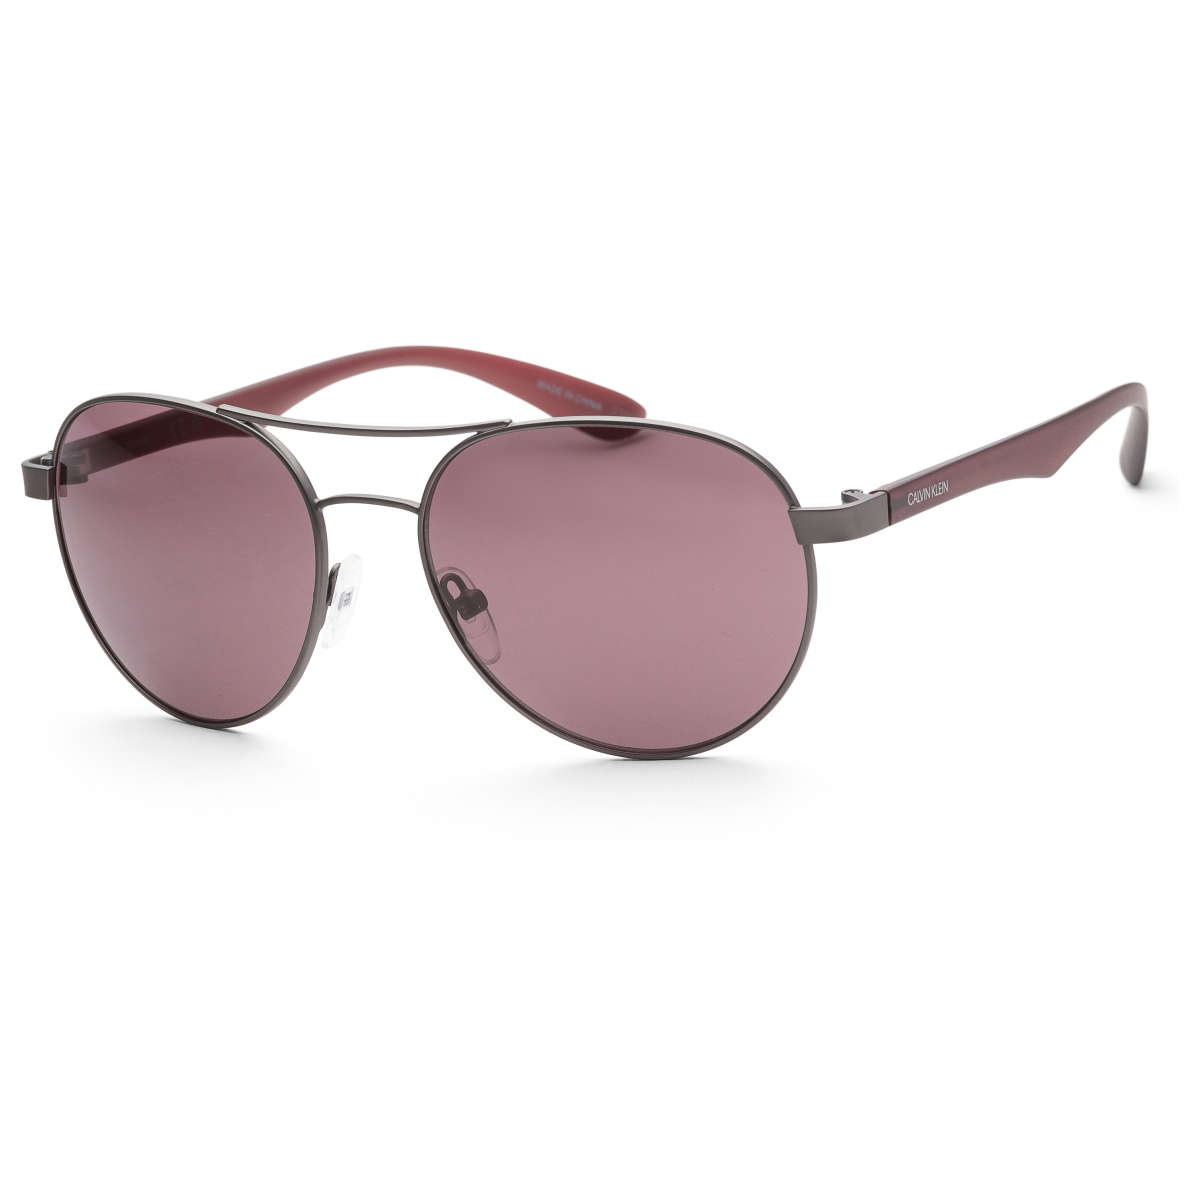 Share 150+ ck sunglasses womens